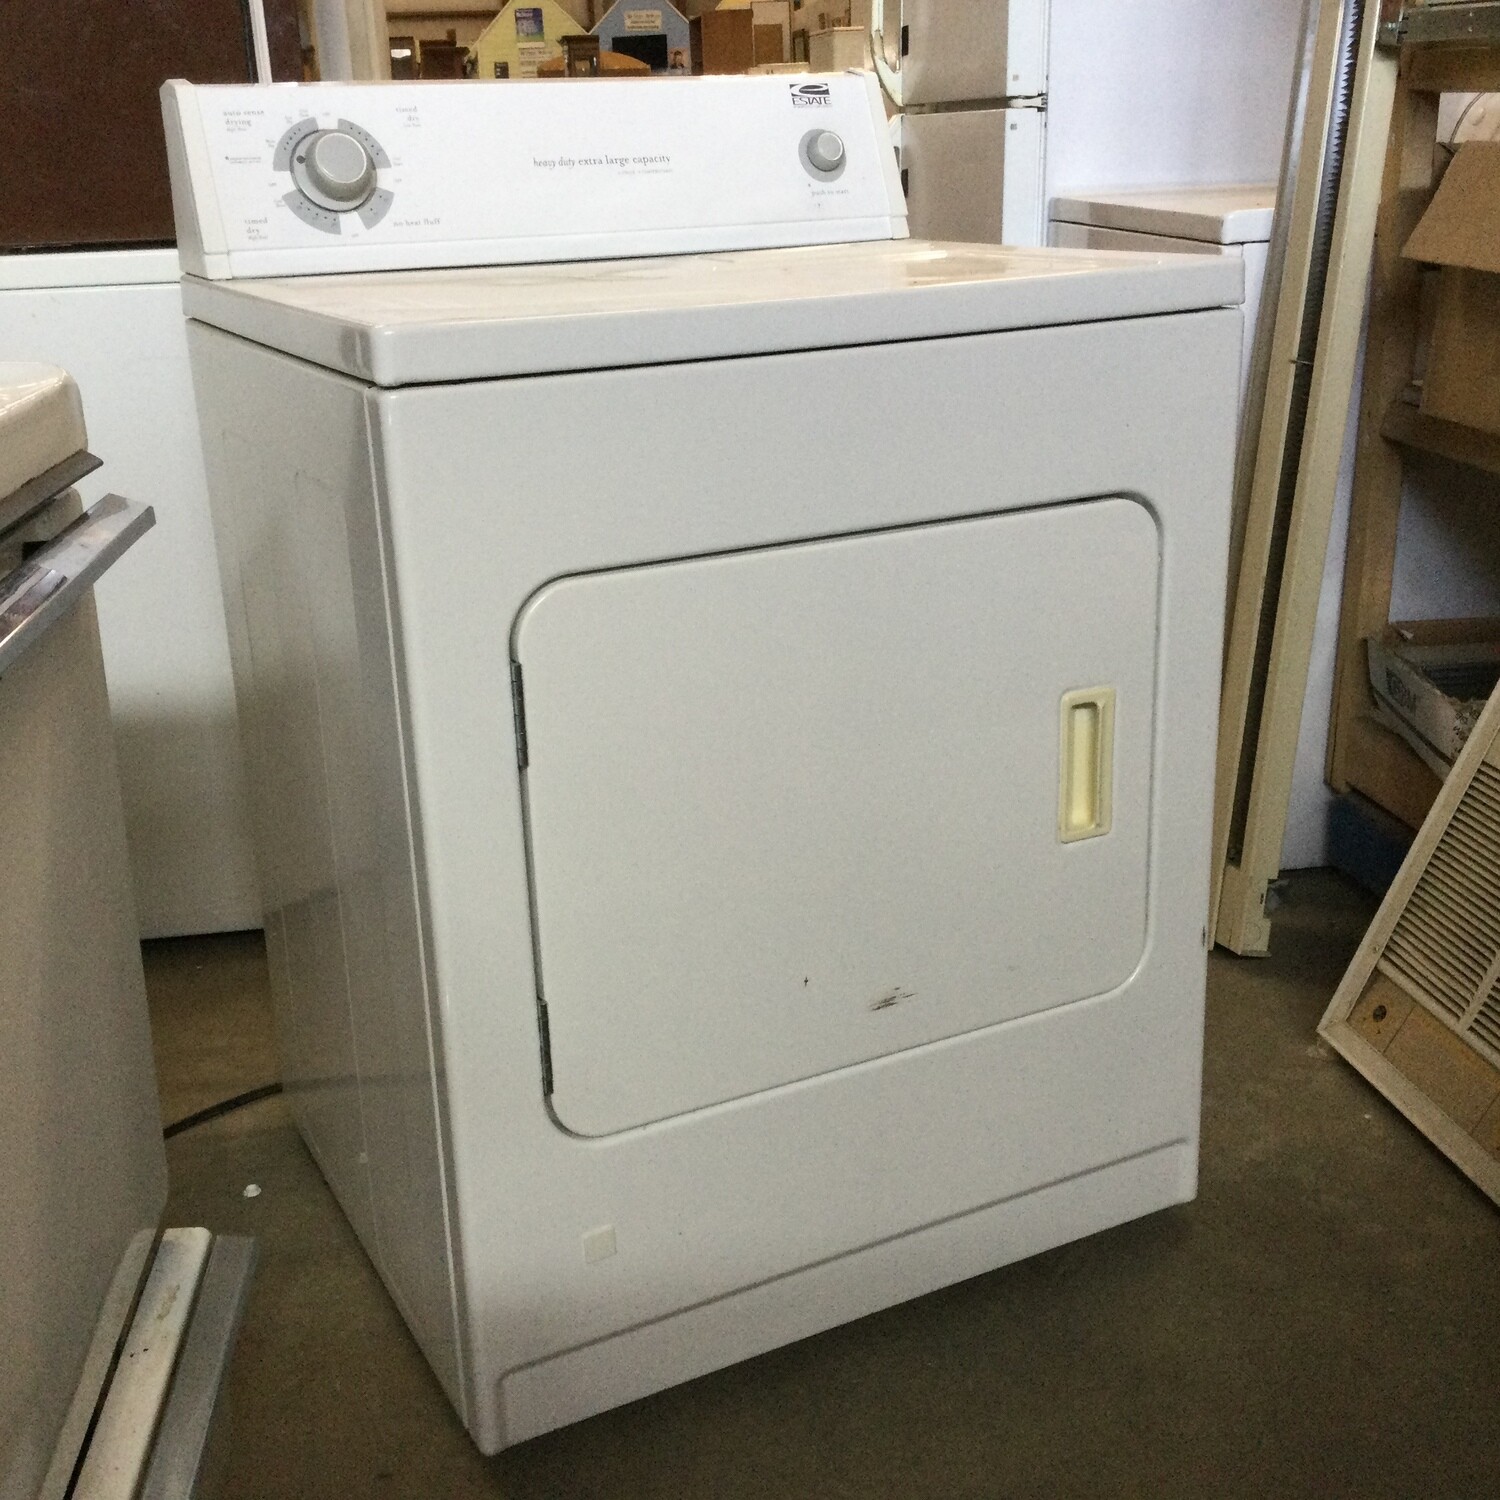 Estate Propane Dryer from Whirplool